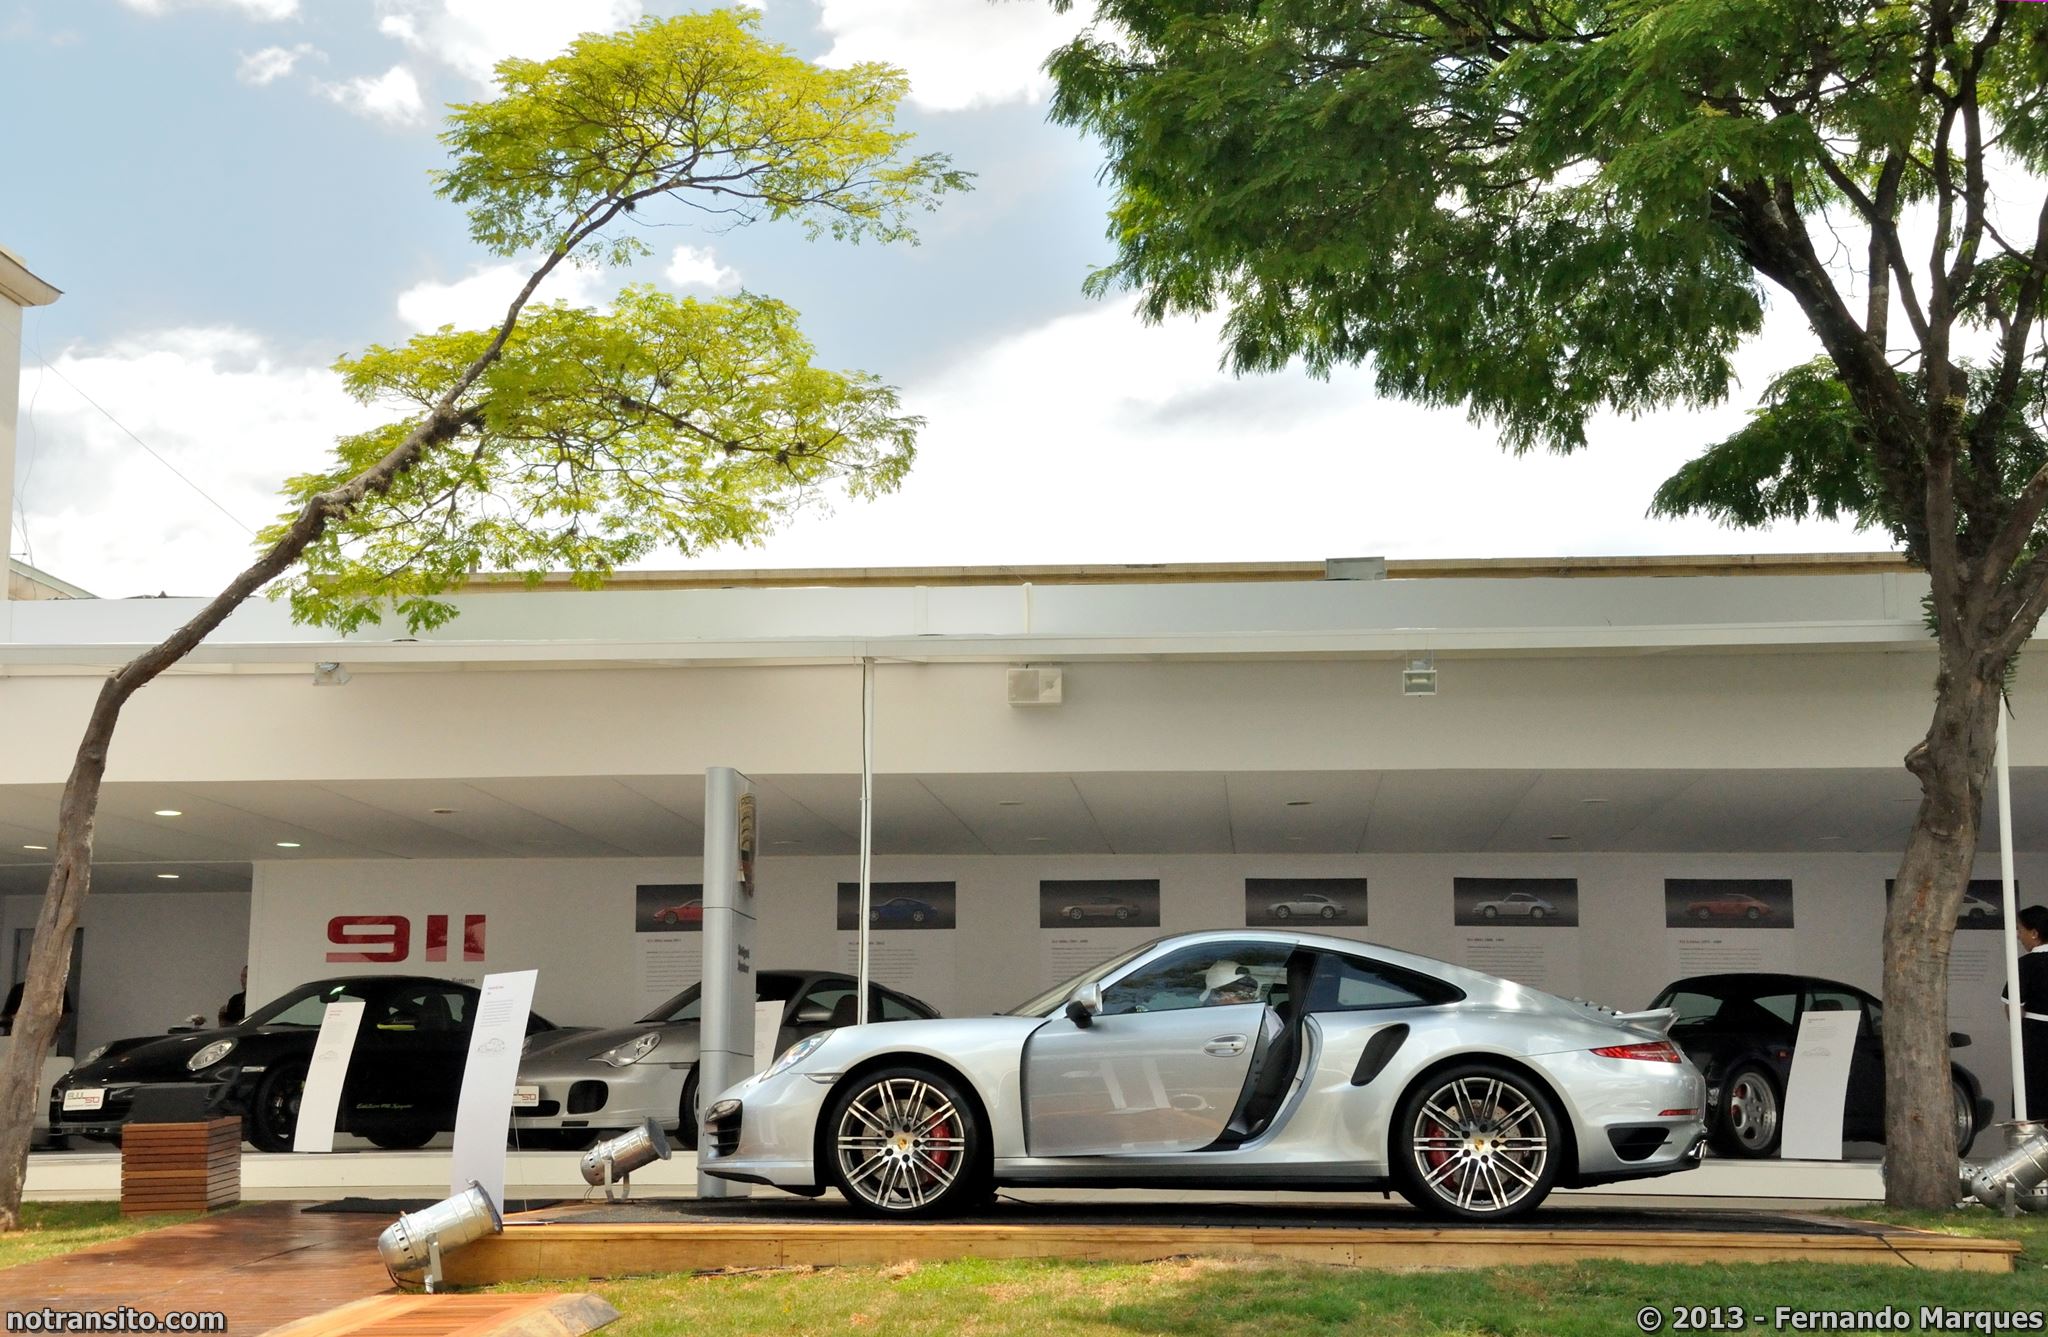 Porsche 911 Turbo 991, Auto Premium Show 2013